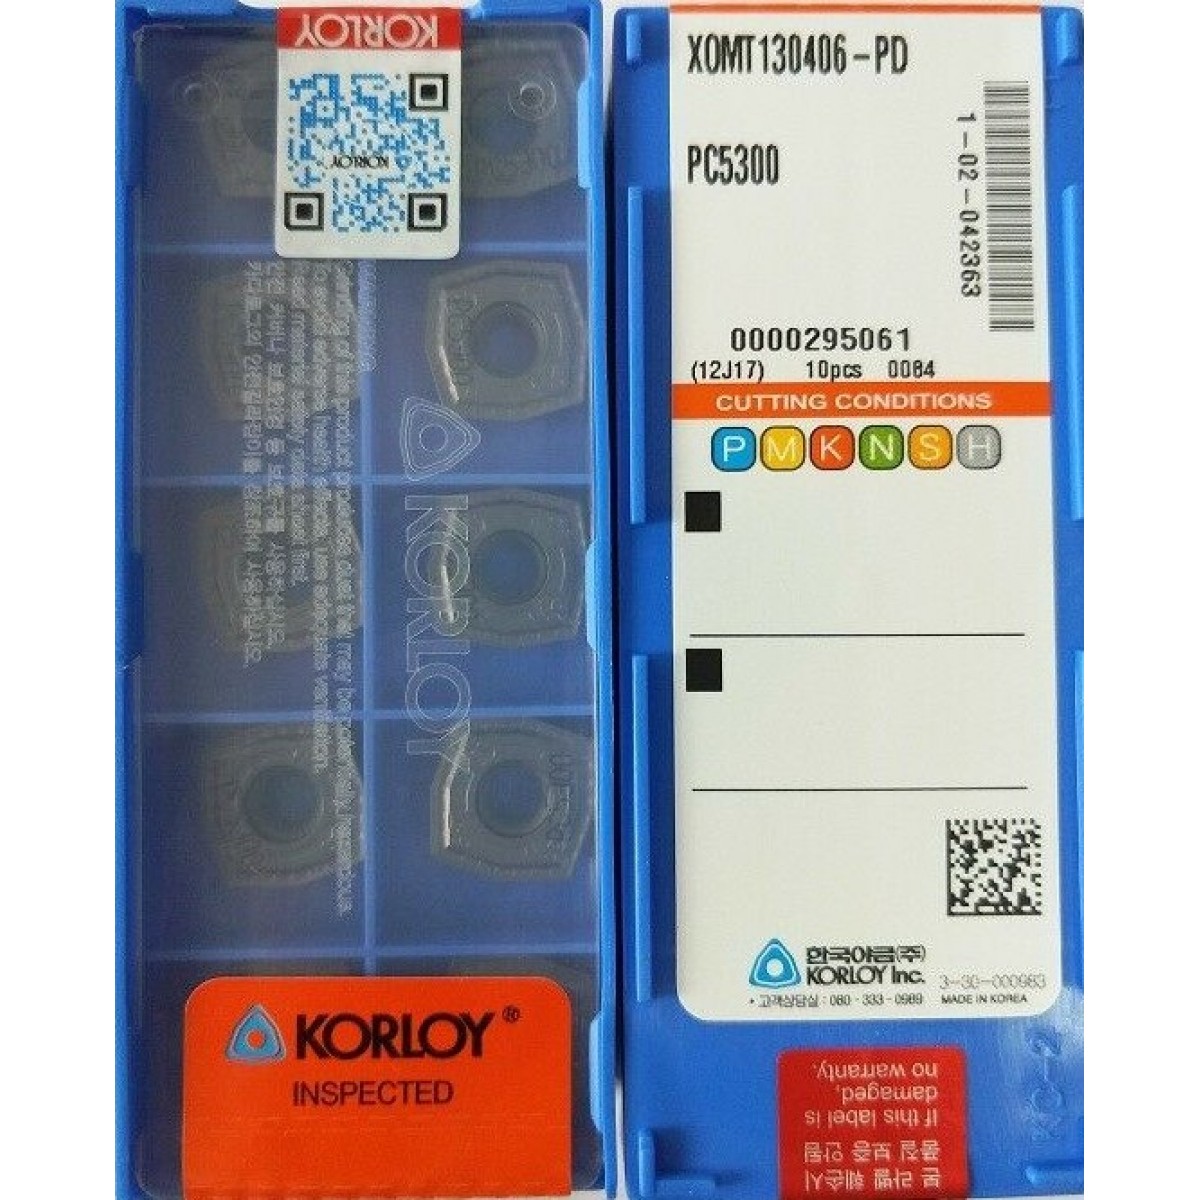 KORLOY - XOMT130406-PD PC5300